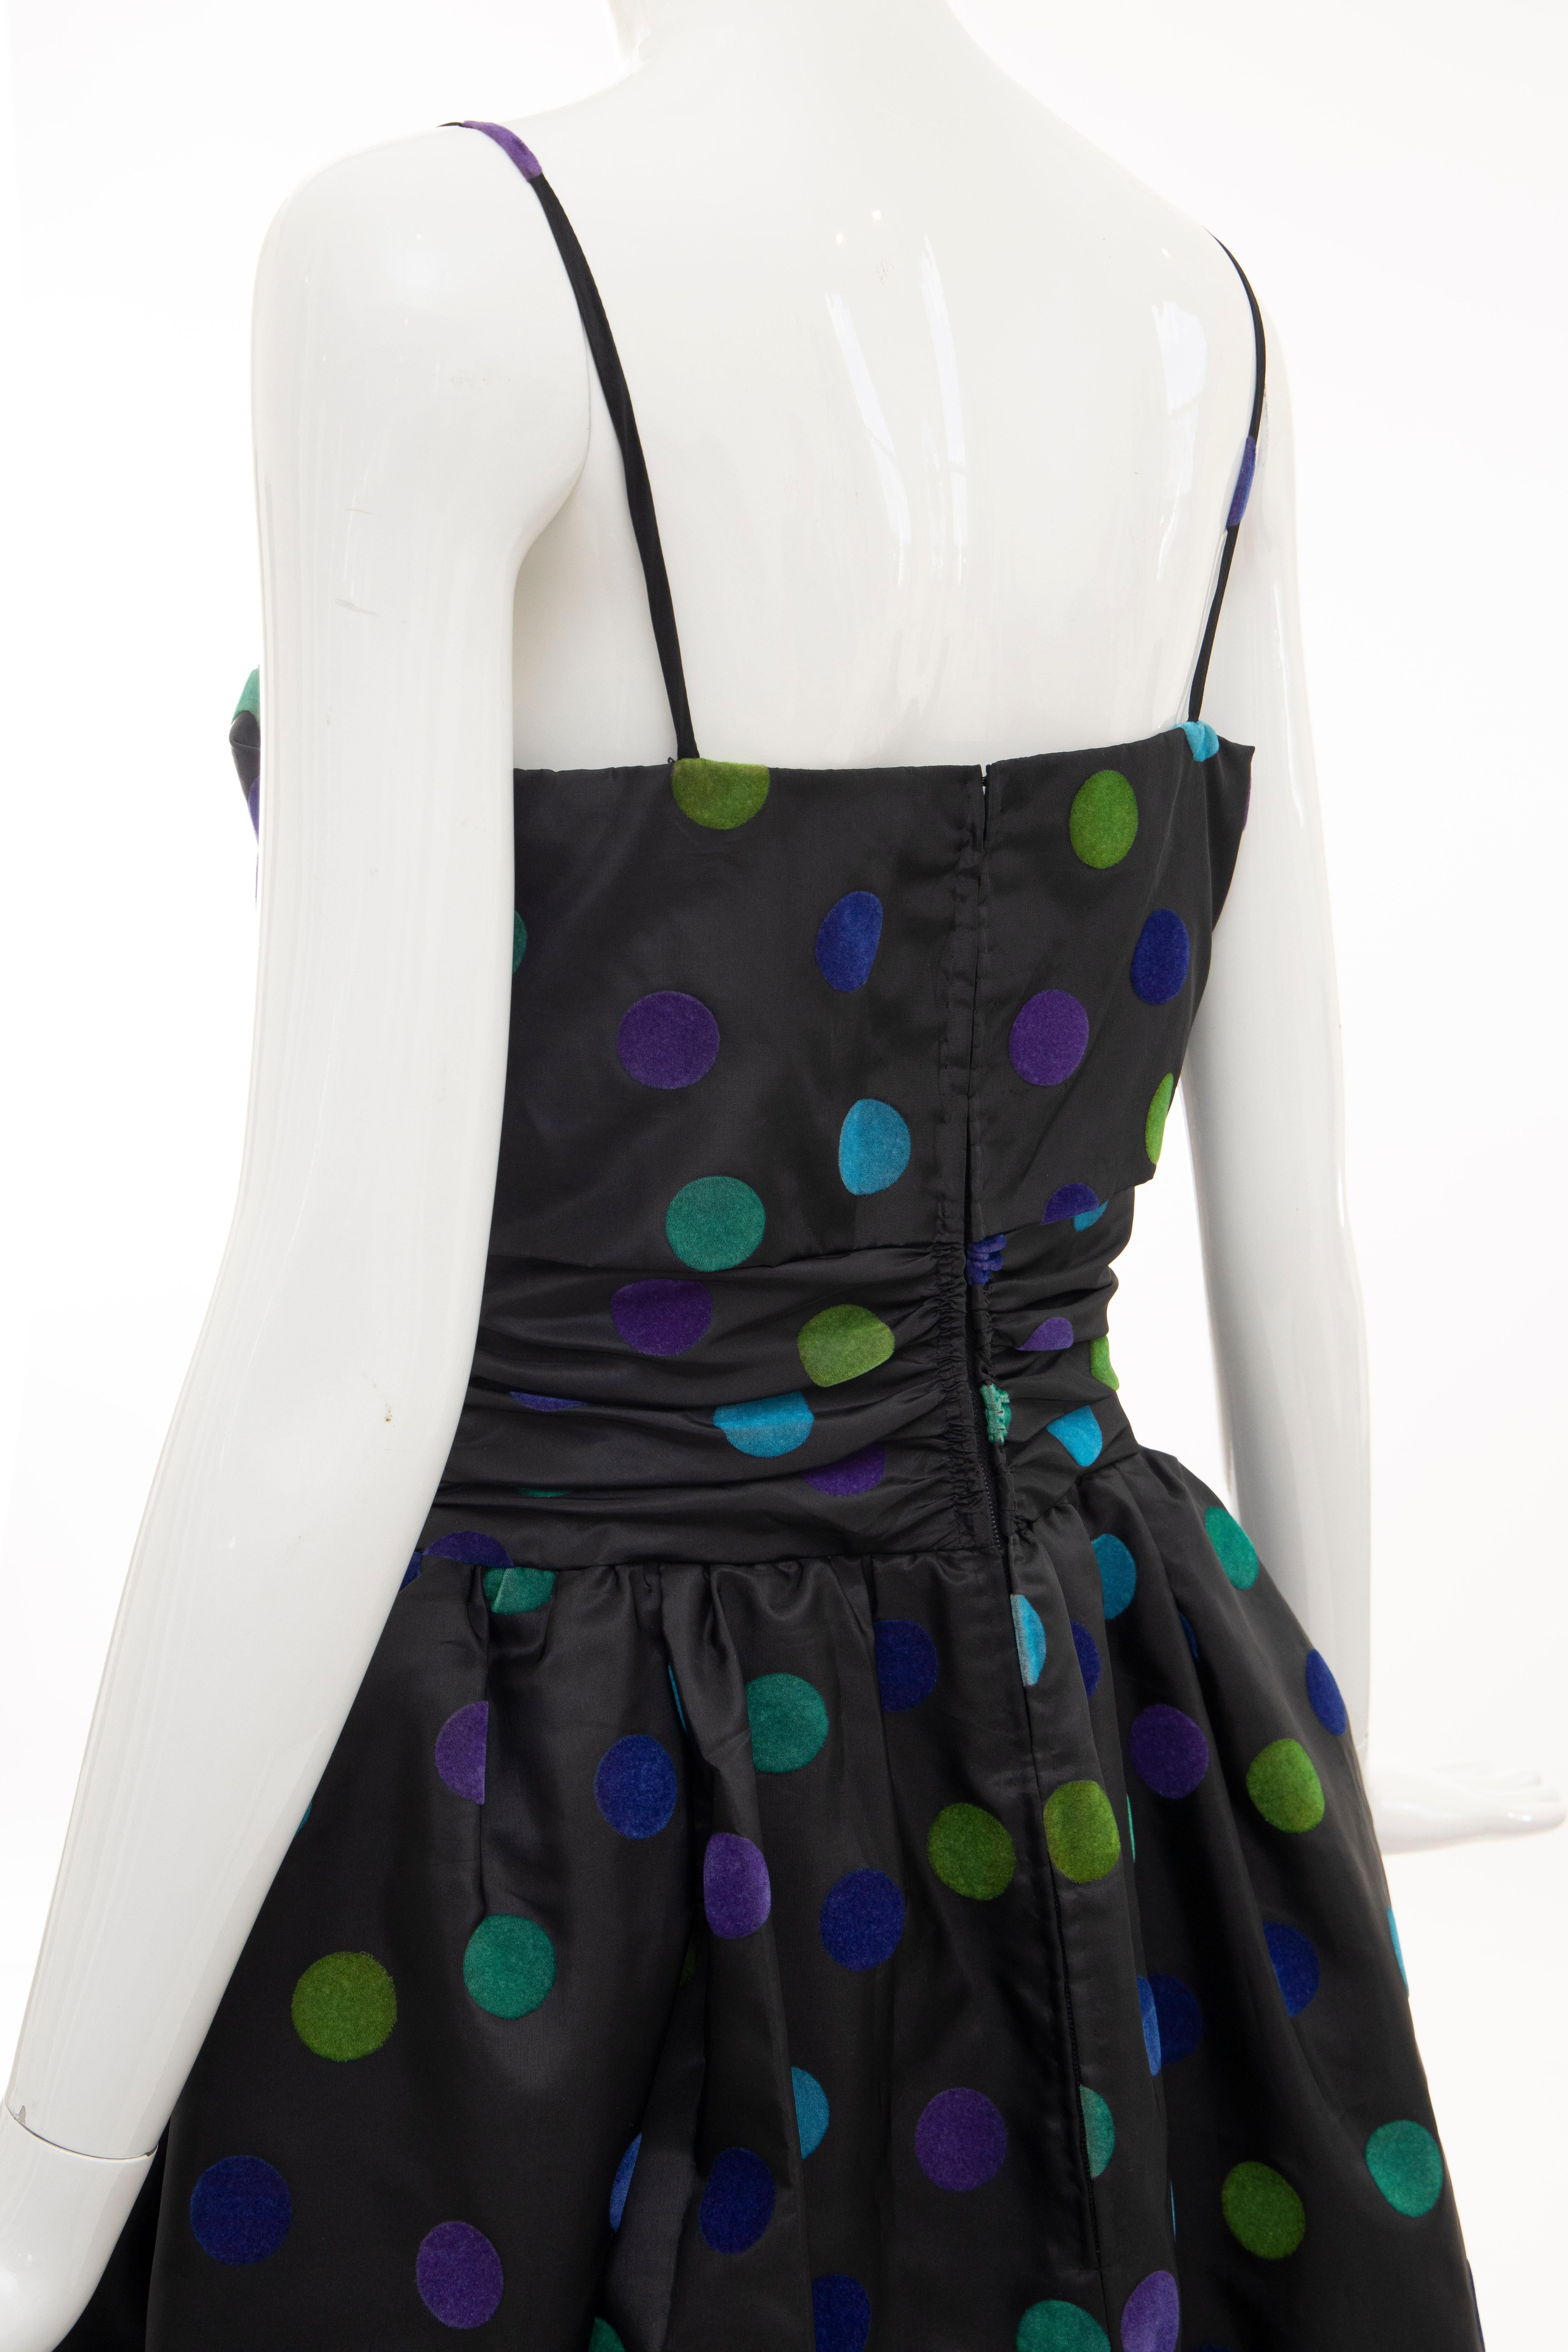 Nina Ricci Black Taffeta Velveteen Polka Dots Evening Dress, Circa: 1980s 10